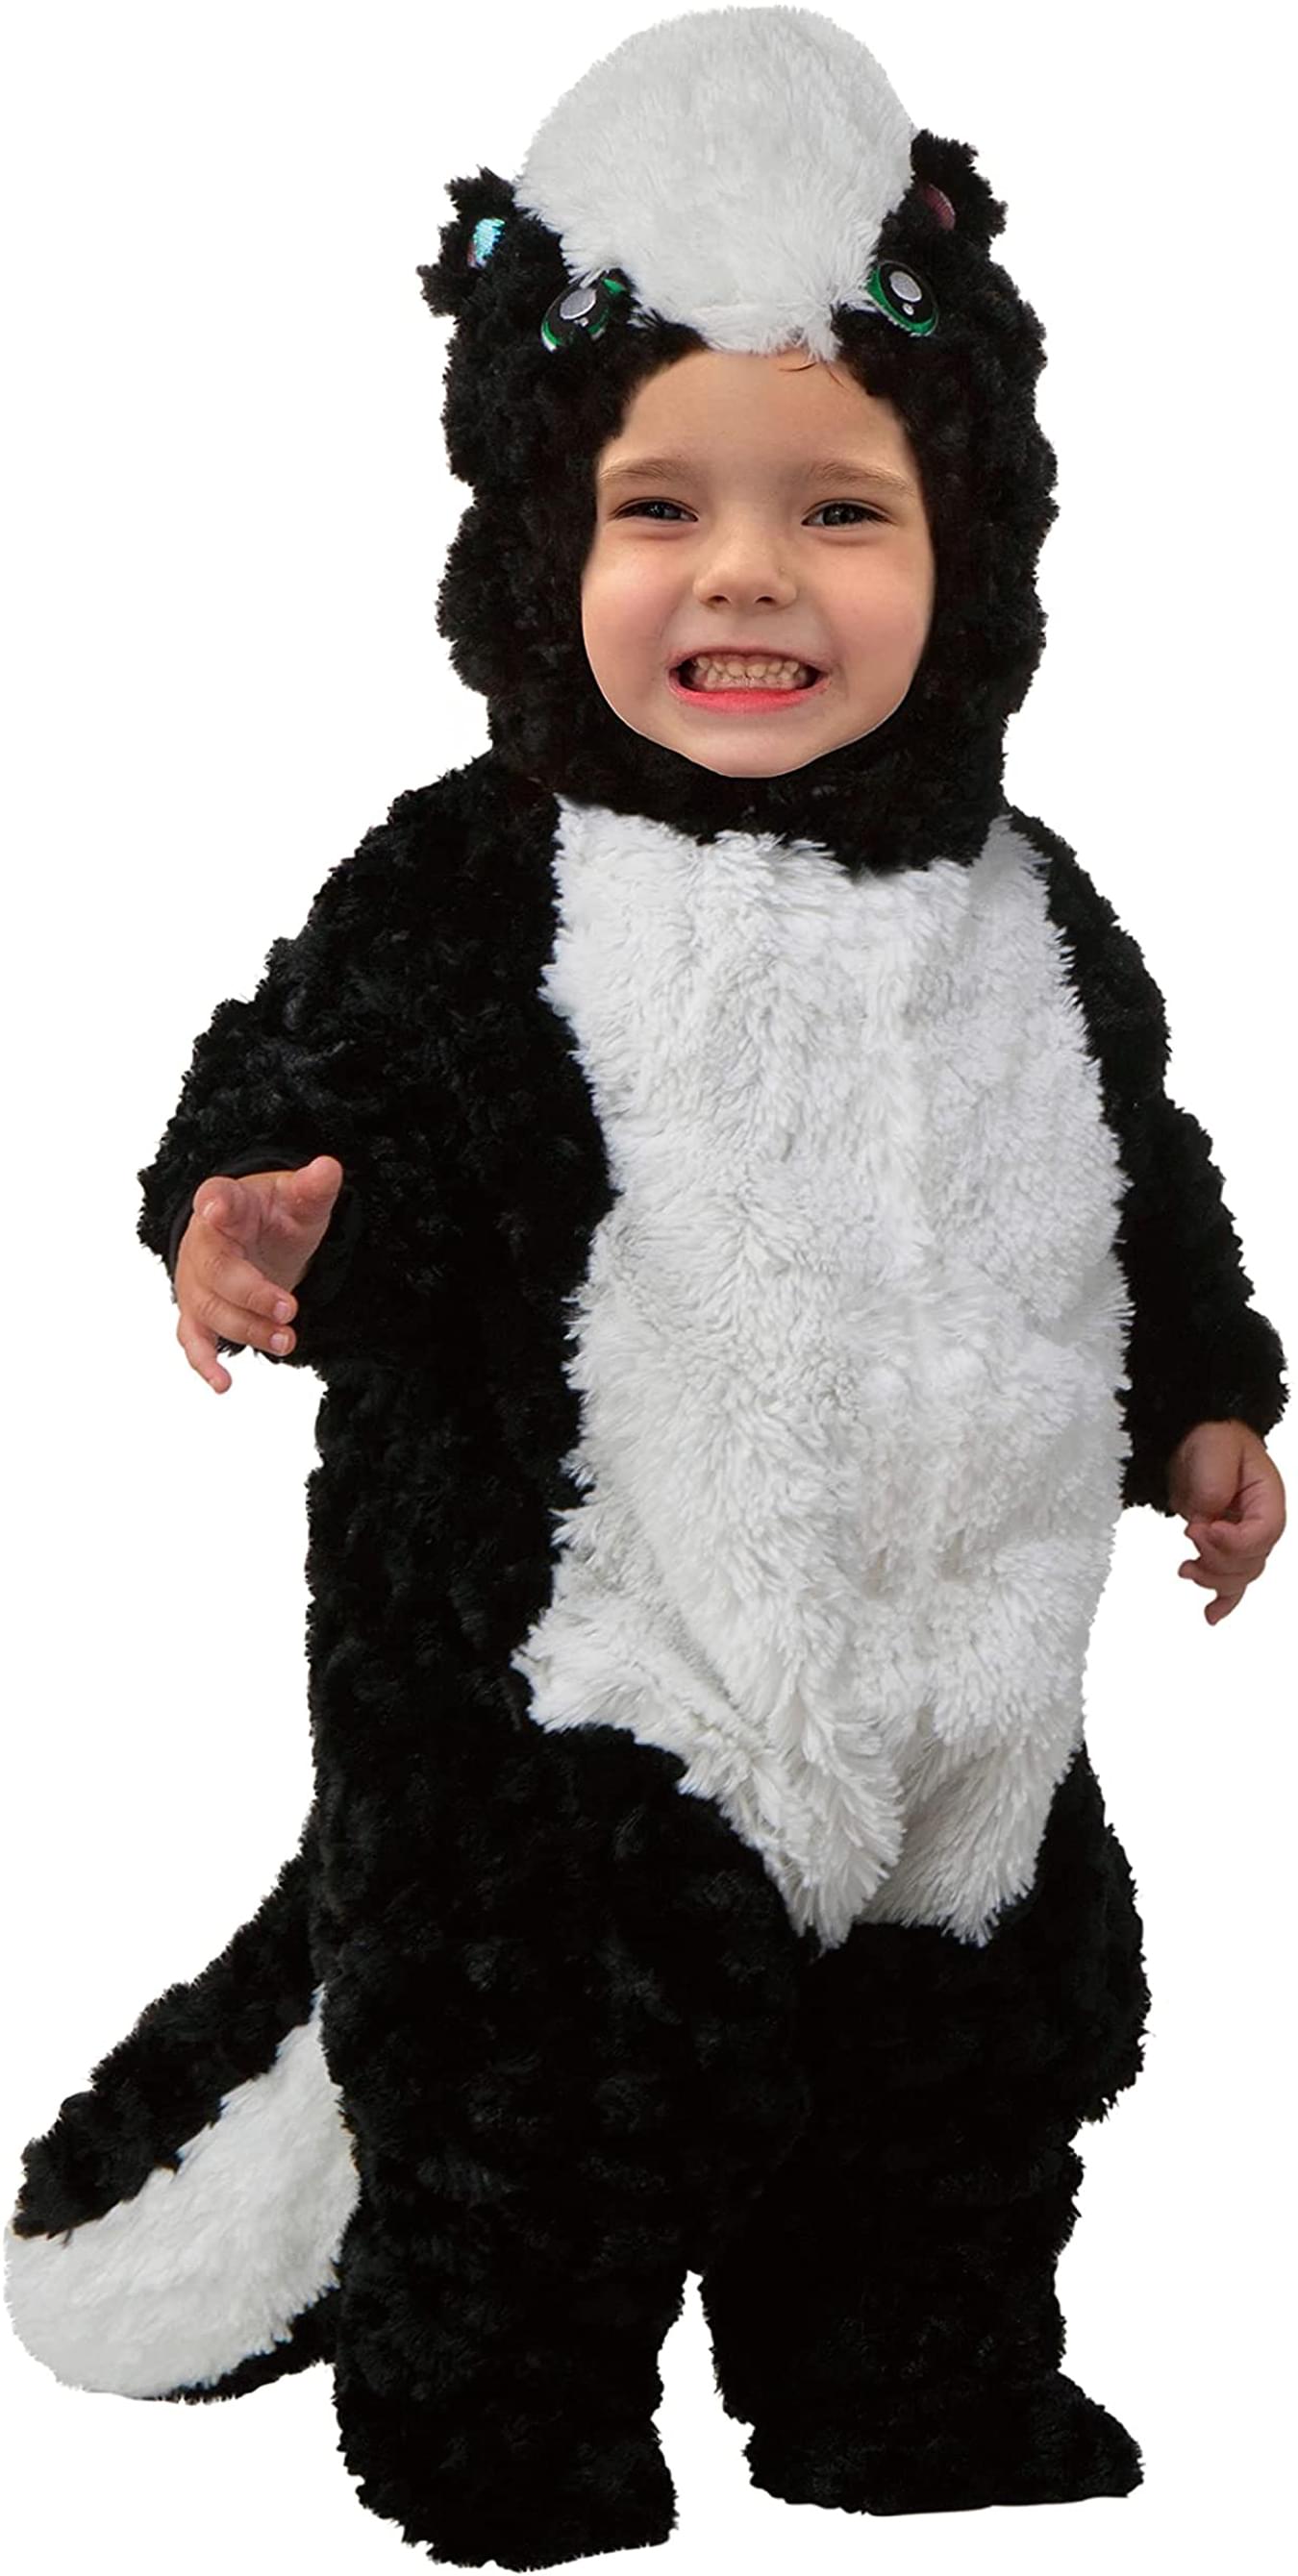 Little Stinker Skunk Baby Costume